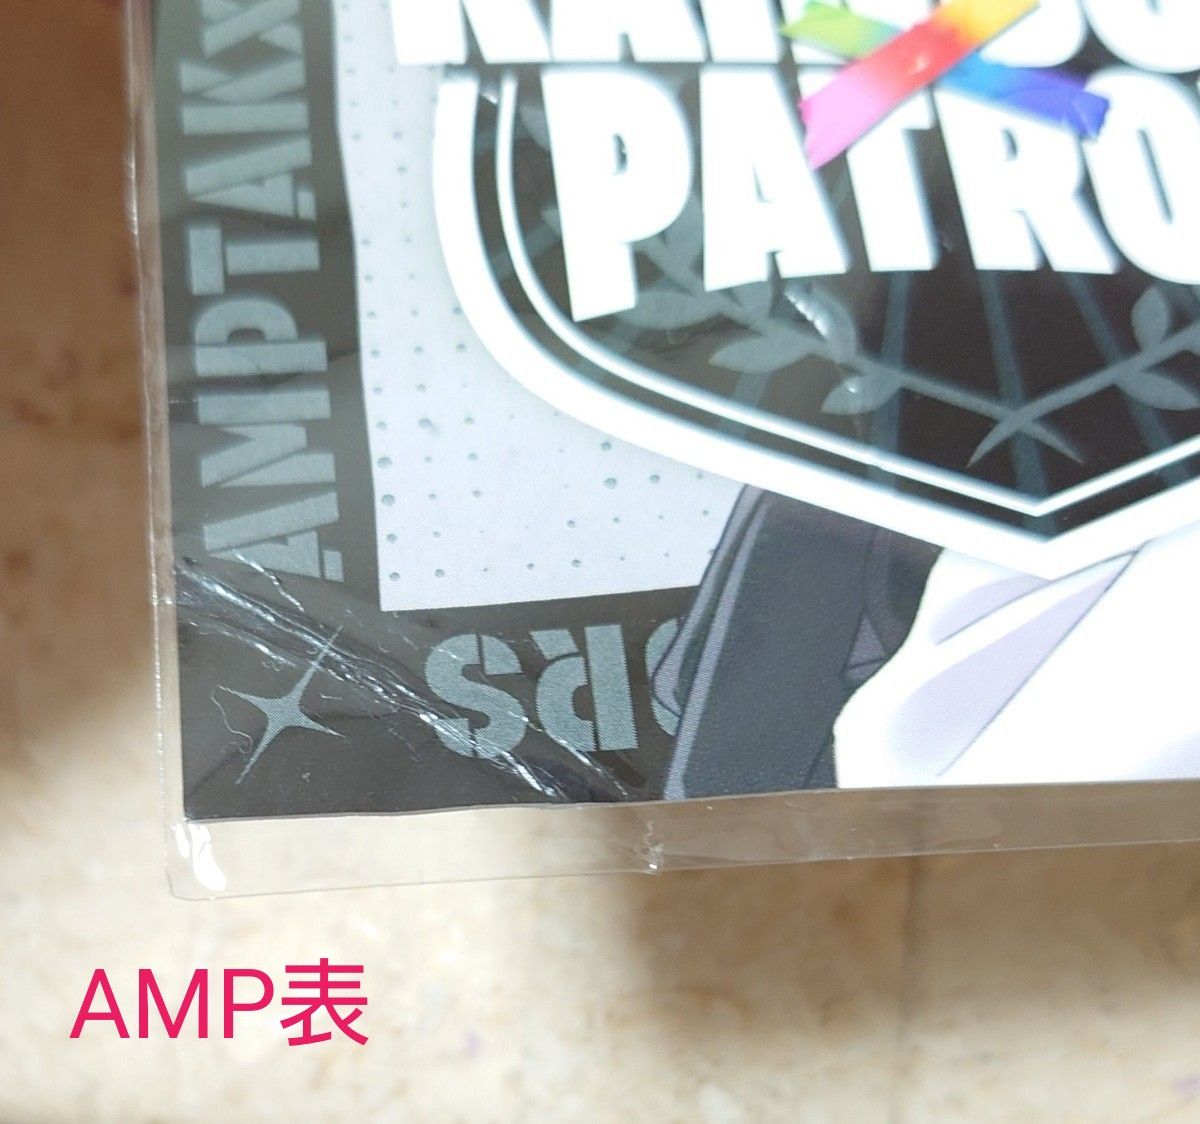 【Amazon.co.jp限定】RAINBOWxPATROL 限定盤特典 複製サイン入りメガジャケ AMP盤/TAK盤 セット